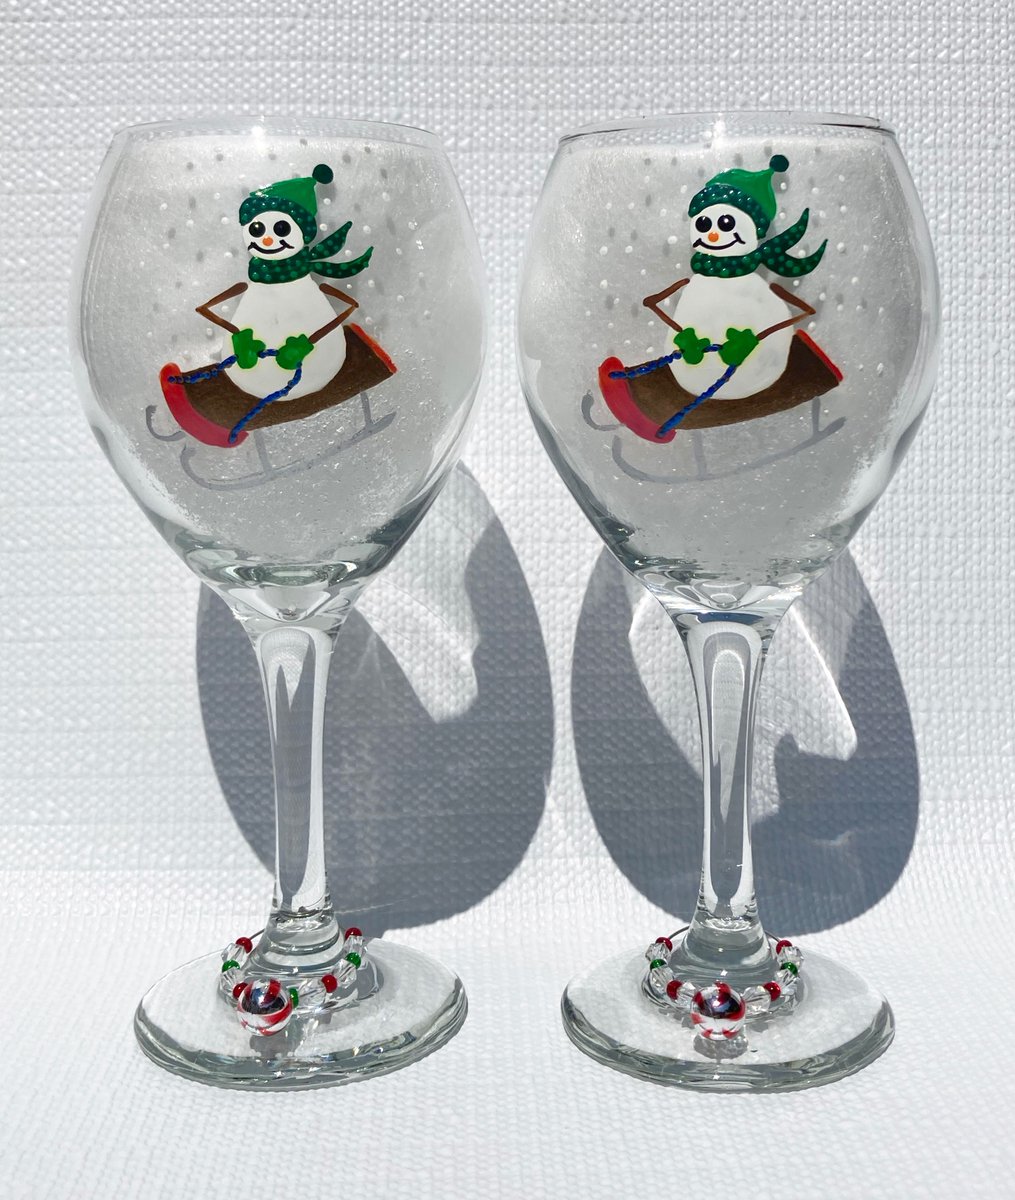 Snowman wine glasses etsy.com/listing/639091… #snowmanwineglasses #christmasglasses #christmaswineglasses #snowmanlovergift #Christmasgifts #holidaydecor #christmasdecor #snowmanonsled